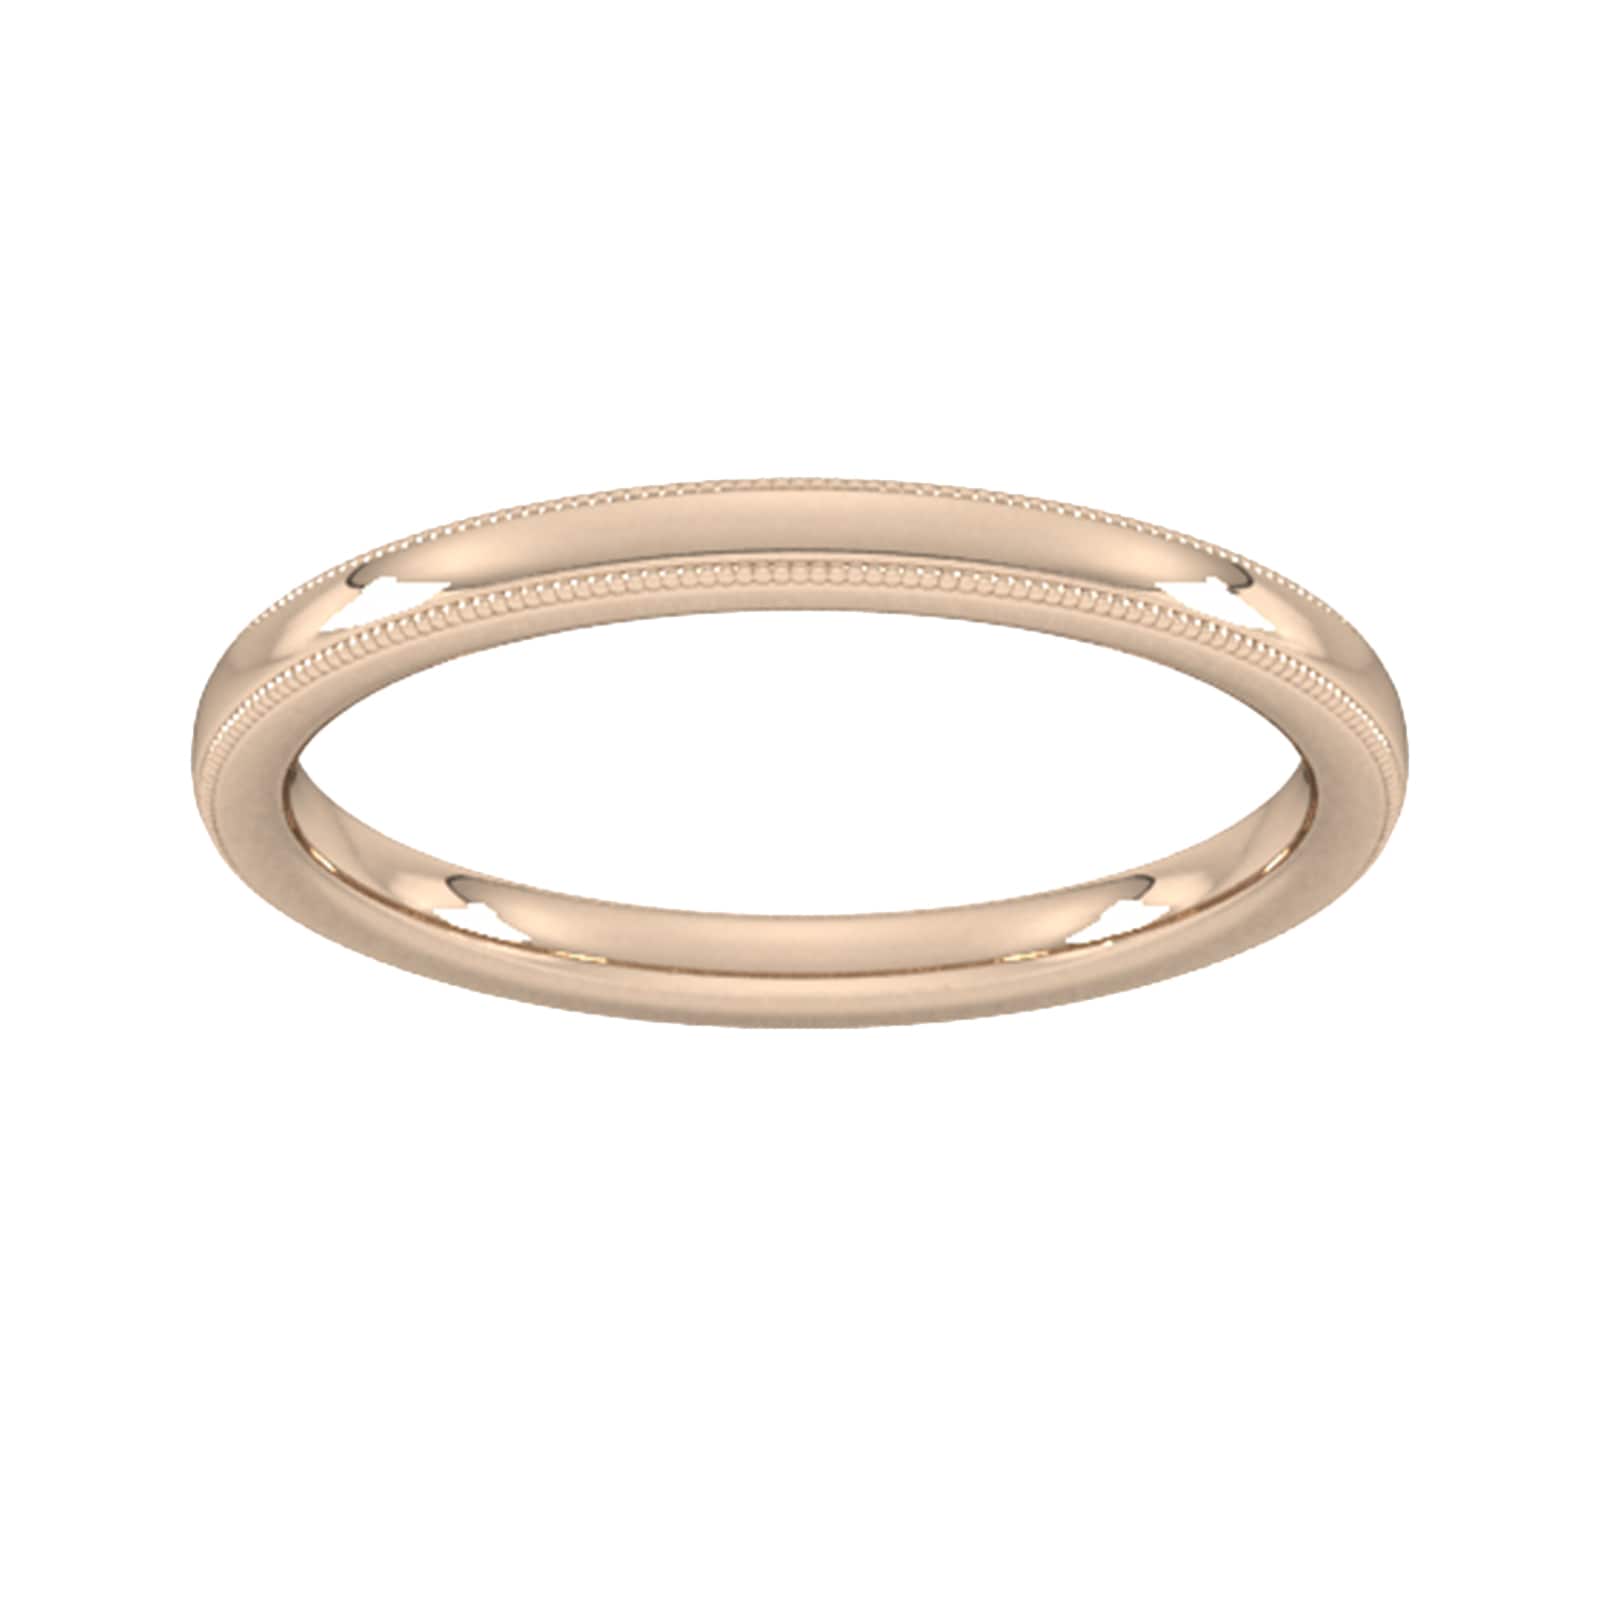 2mm Slight Court Extra Heavy Milgrain Edge Wedding Ring In 9 Carat Rose Gold - Ring Size O